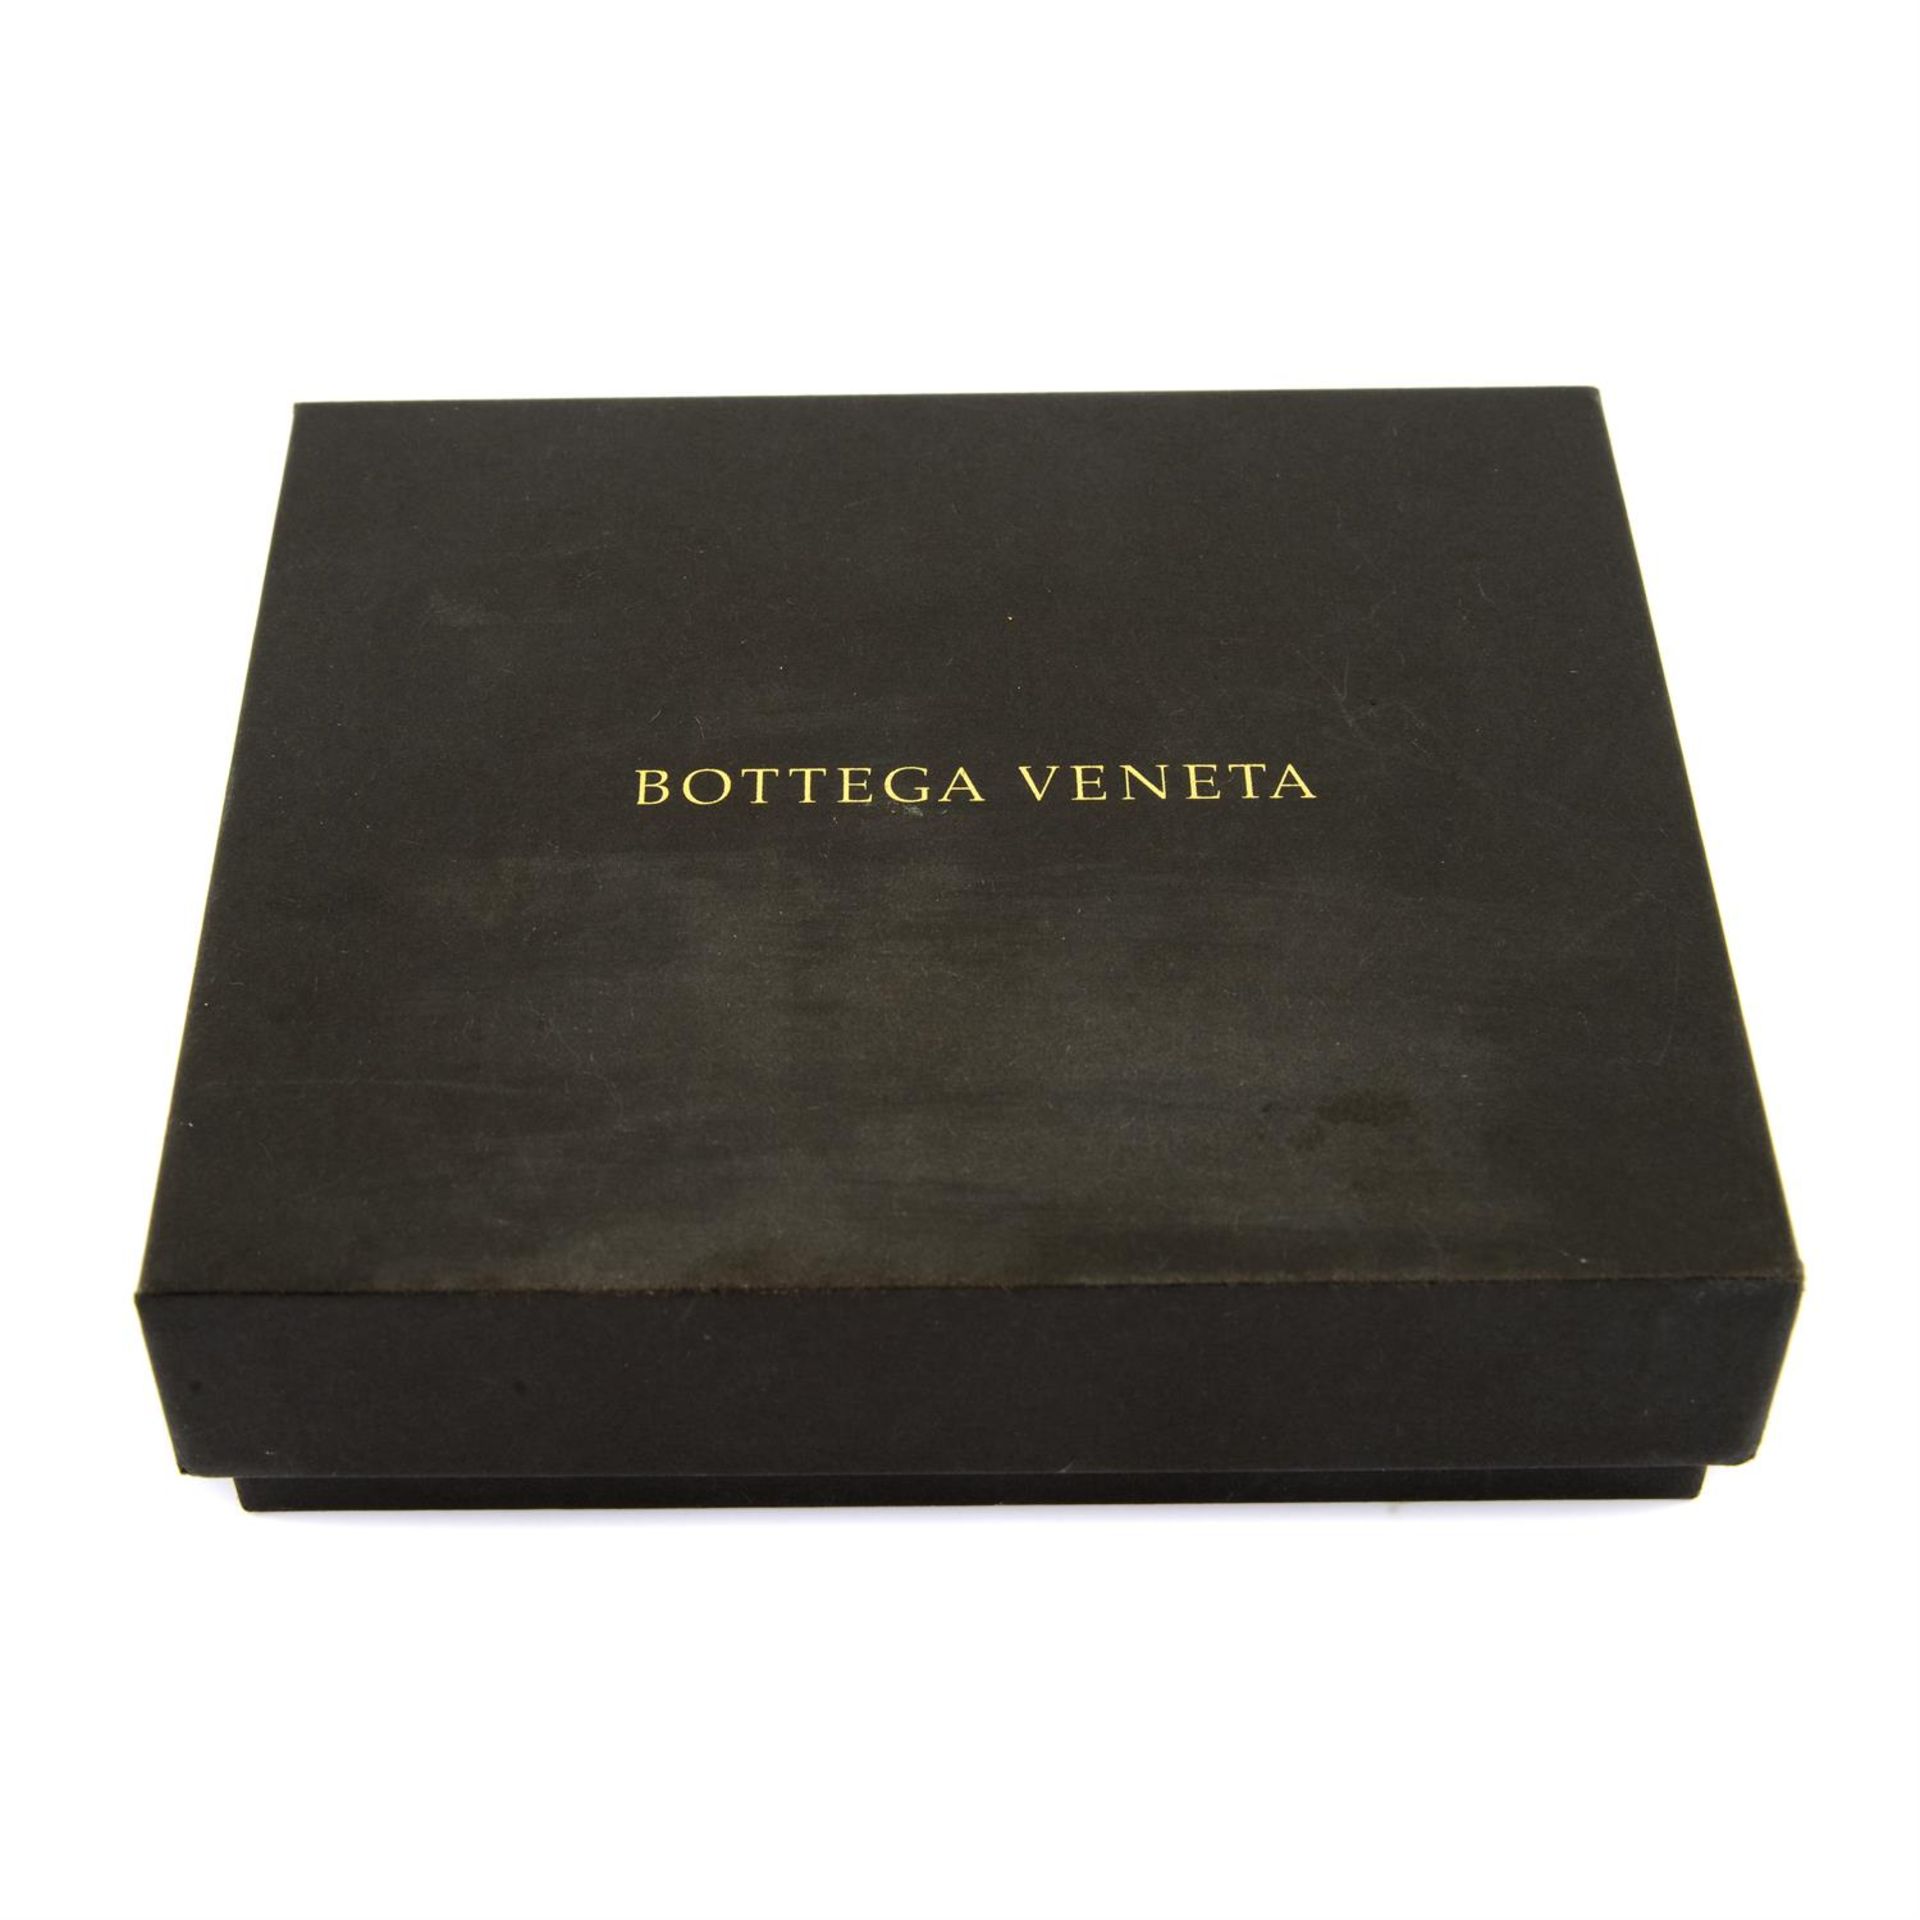 BOTTEGA VENETA - a burgundy leather card holder. - Image 3 of 3